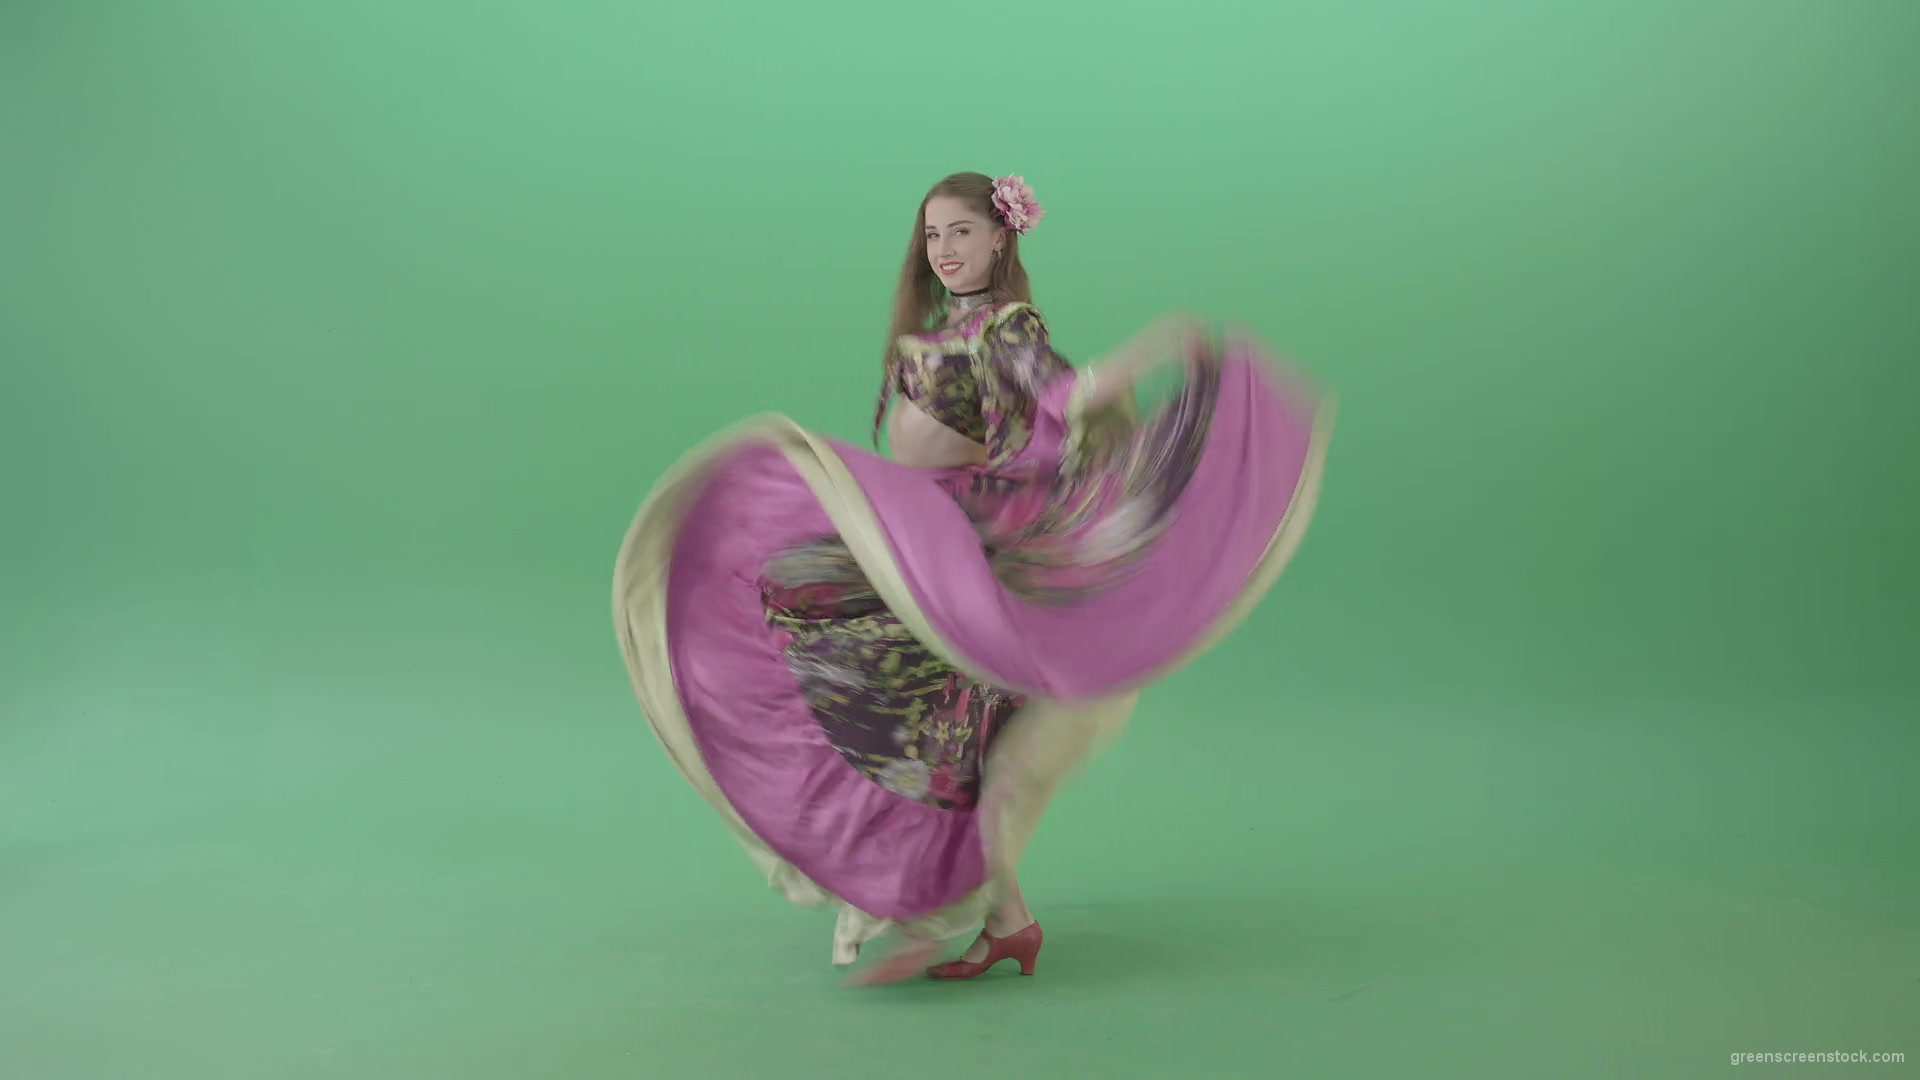 Tzigane-romana-gypsy-girl-waving-pink-dress-dancing-isolated-in-green-screen-studio-4K-Green-Screen-Video-Footage-1920_004 Green Screen Stock